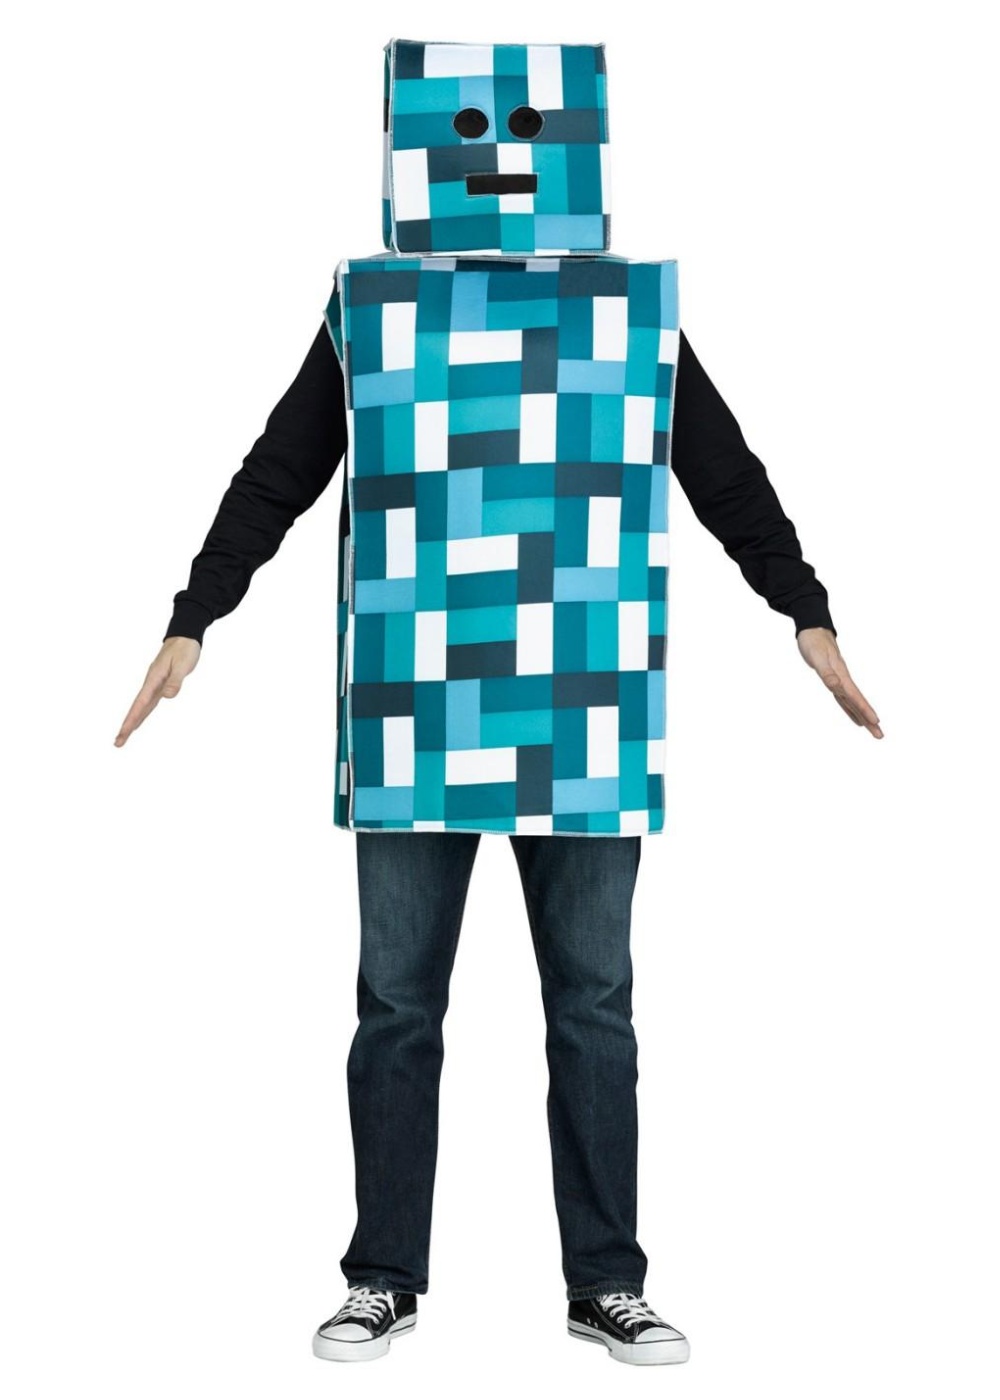  Blue Pixel Robot Costume